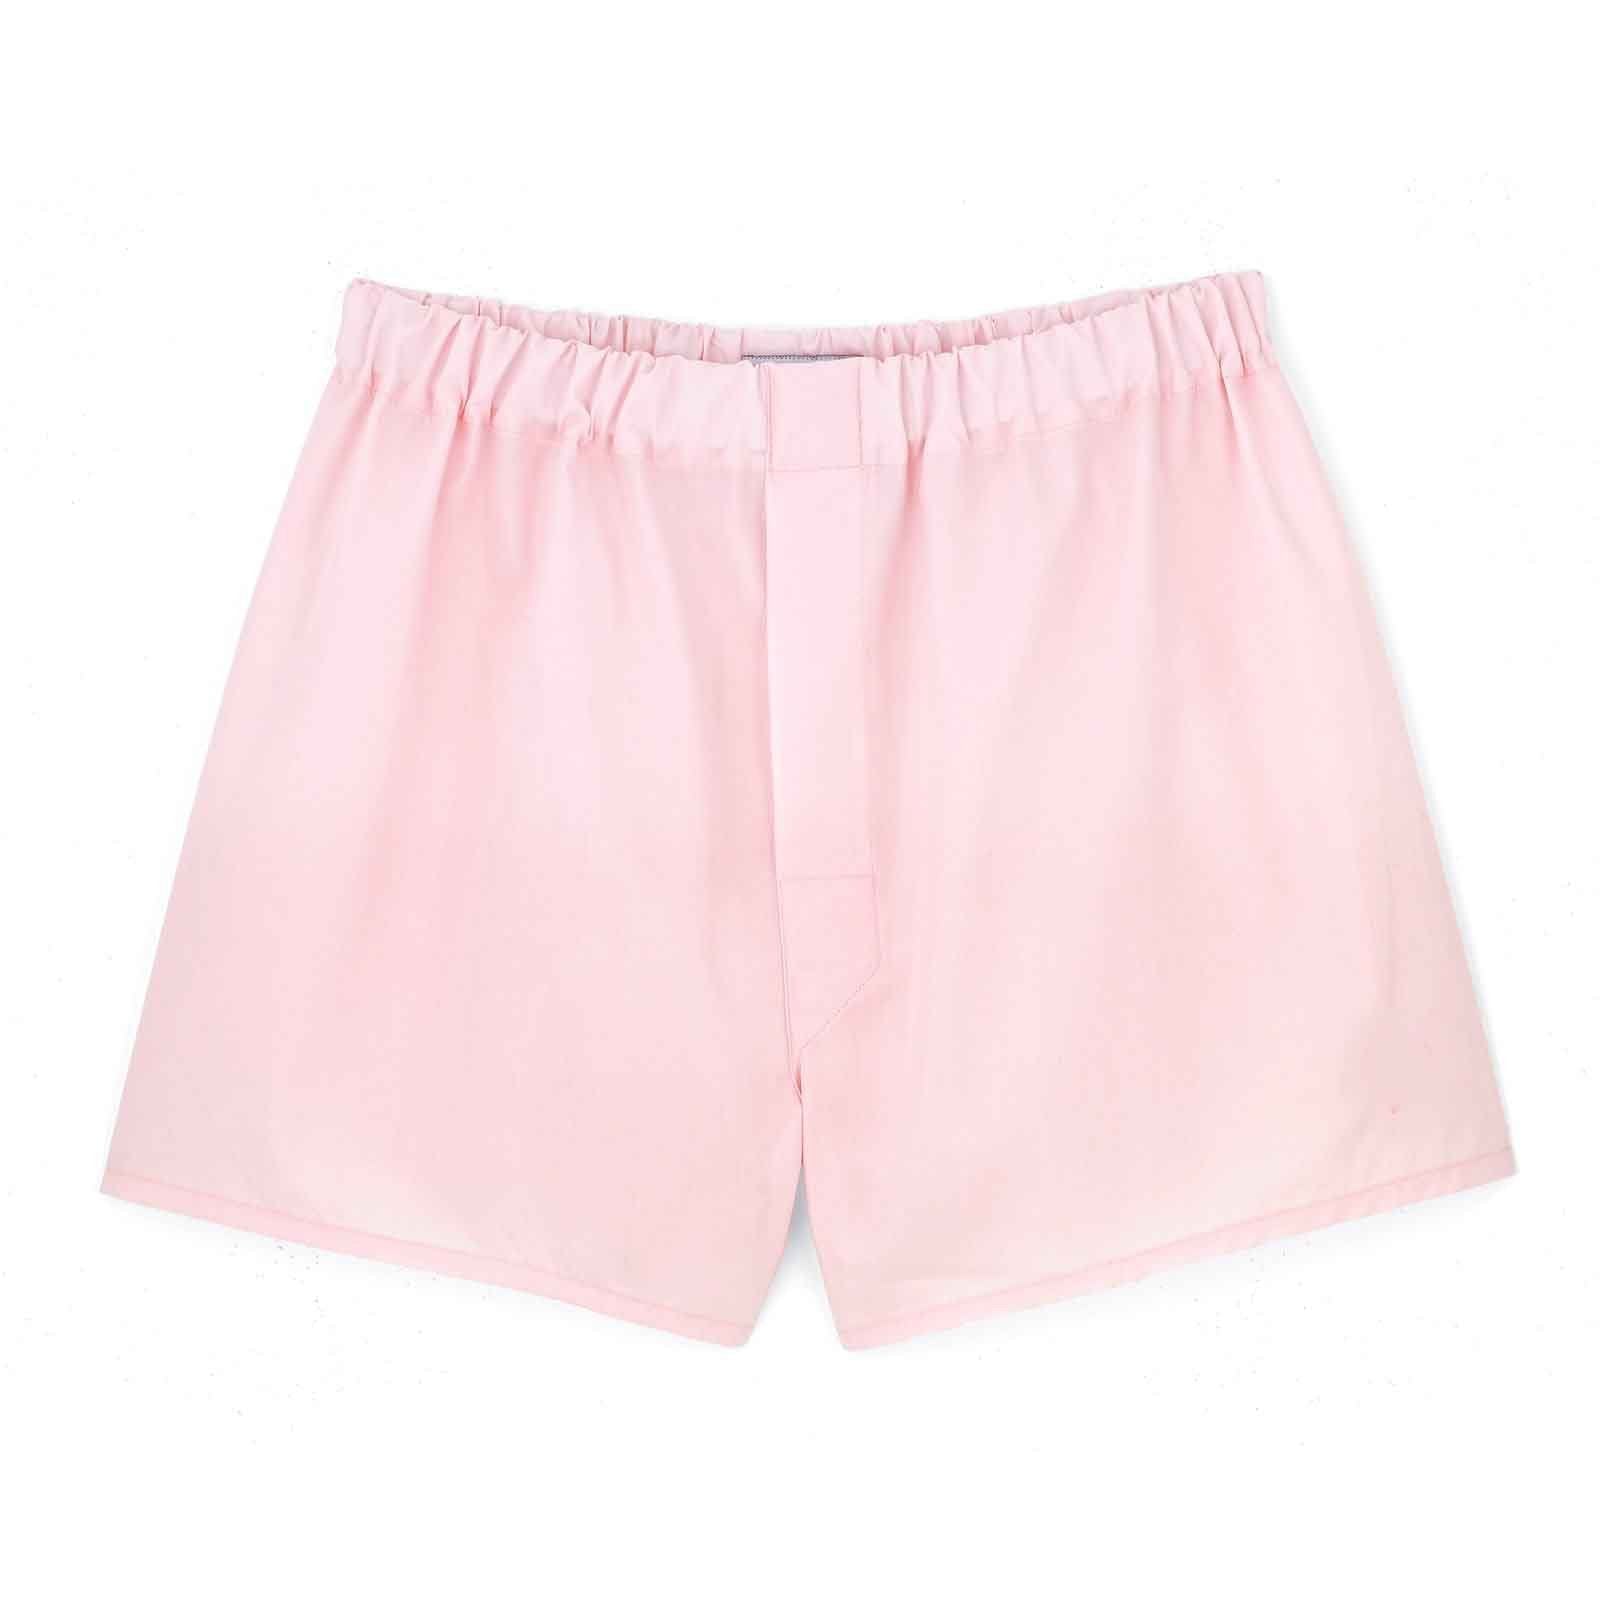 Pink Superior Cotton Boxer Shorts - Classic freeshipping - Emma Willis